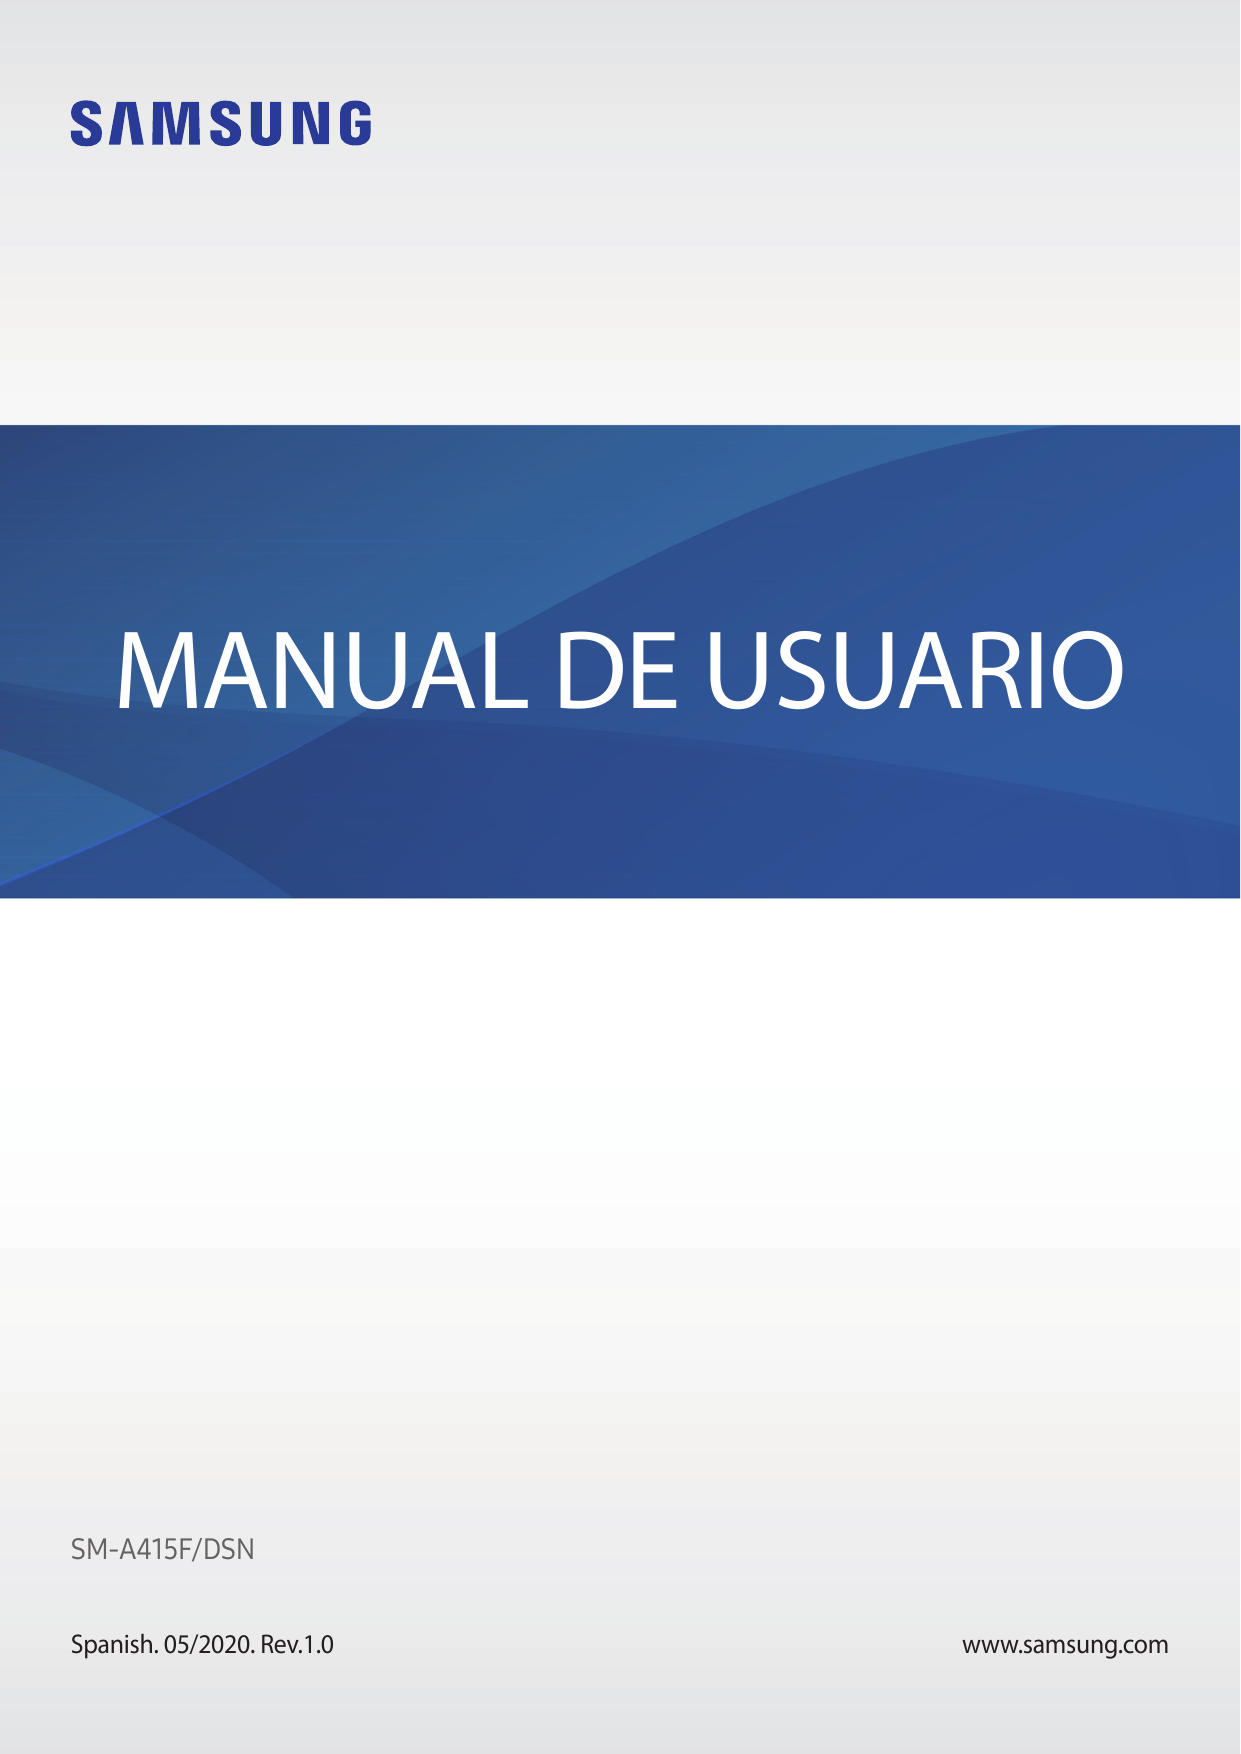 MANUAL DE USUARIOSM-A415F/DSNSpanish. 05/2020. Rev.1.0www.samsung.com